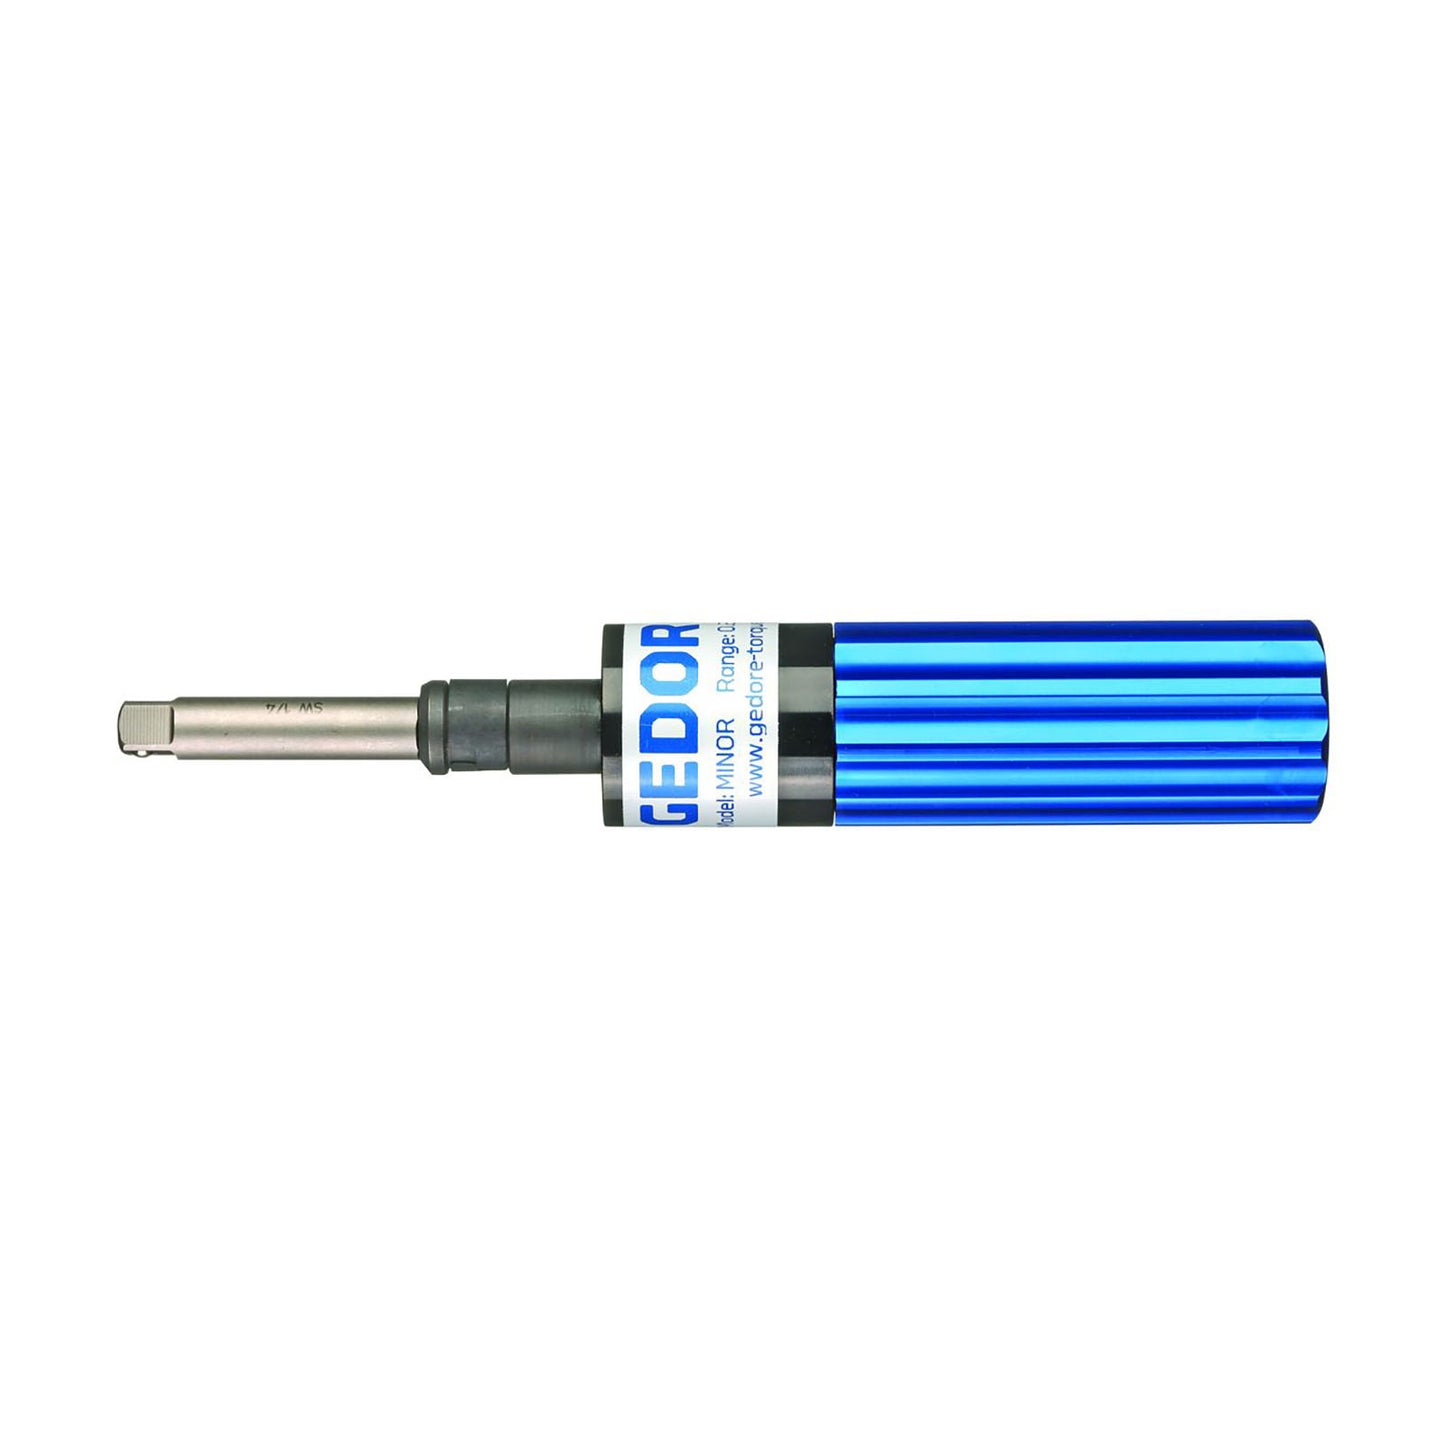 GEDORE STANDARD FH R - 1/4" dynamometric screwdriver 50-406 cNm 015640 red (2345056)